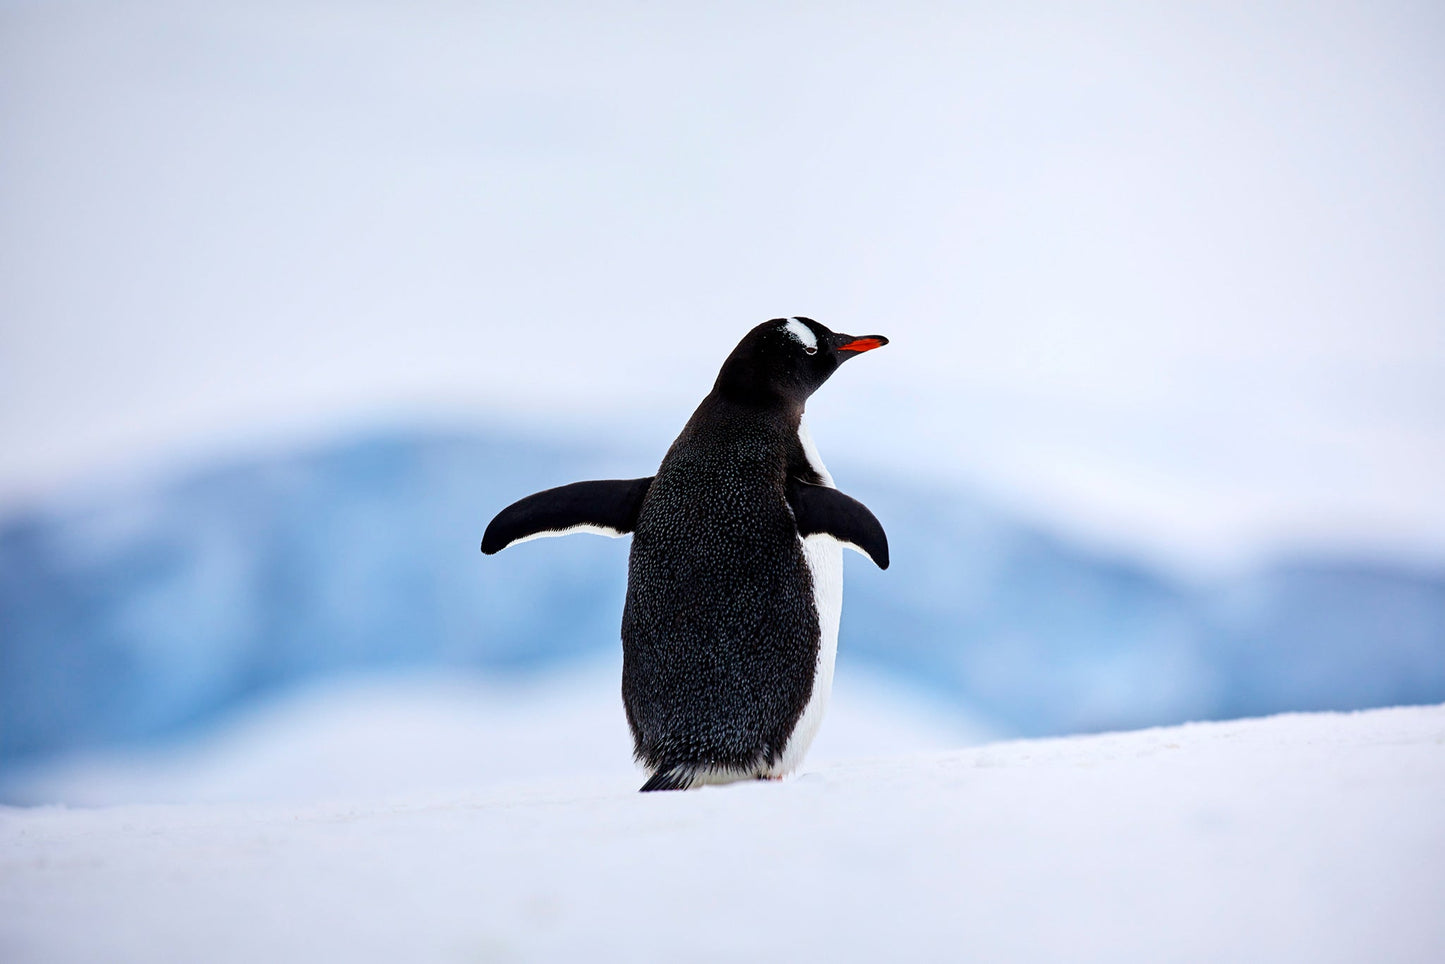 Stretching out - Gentoo penguin, Antarctica